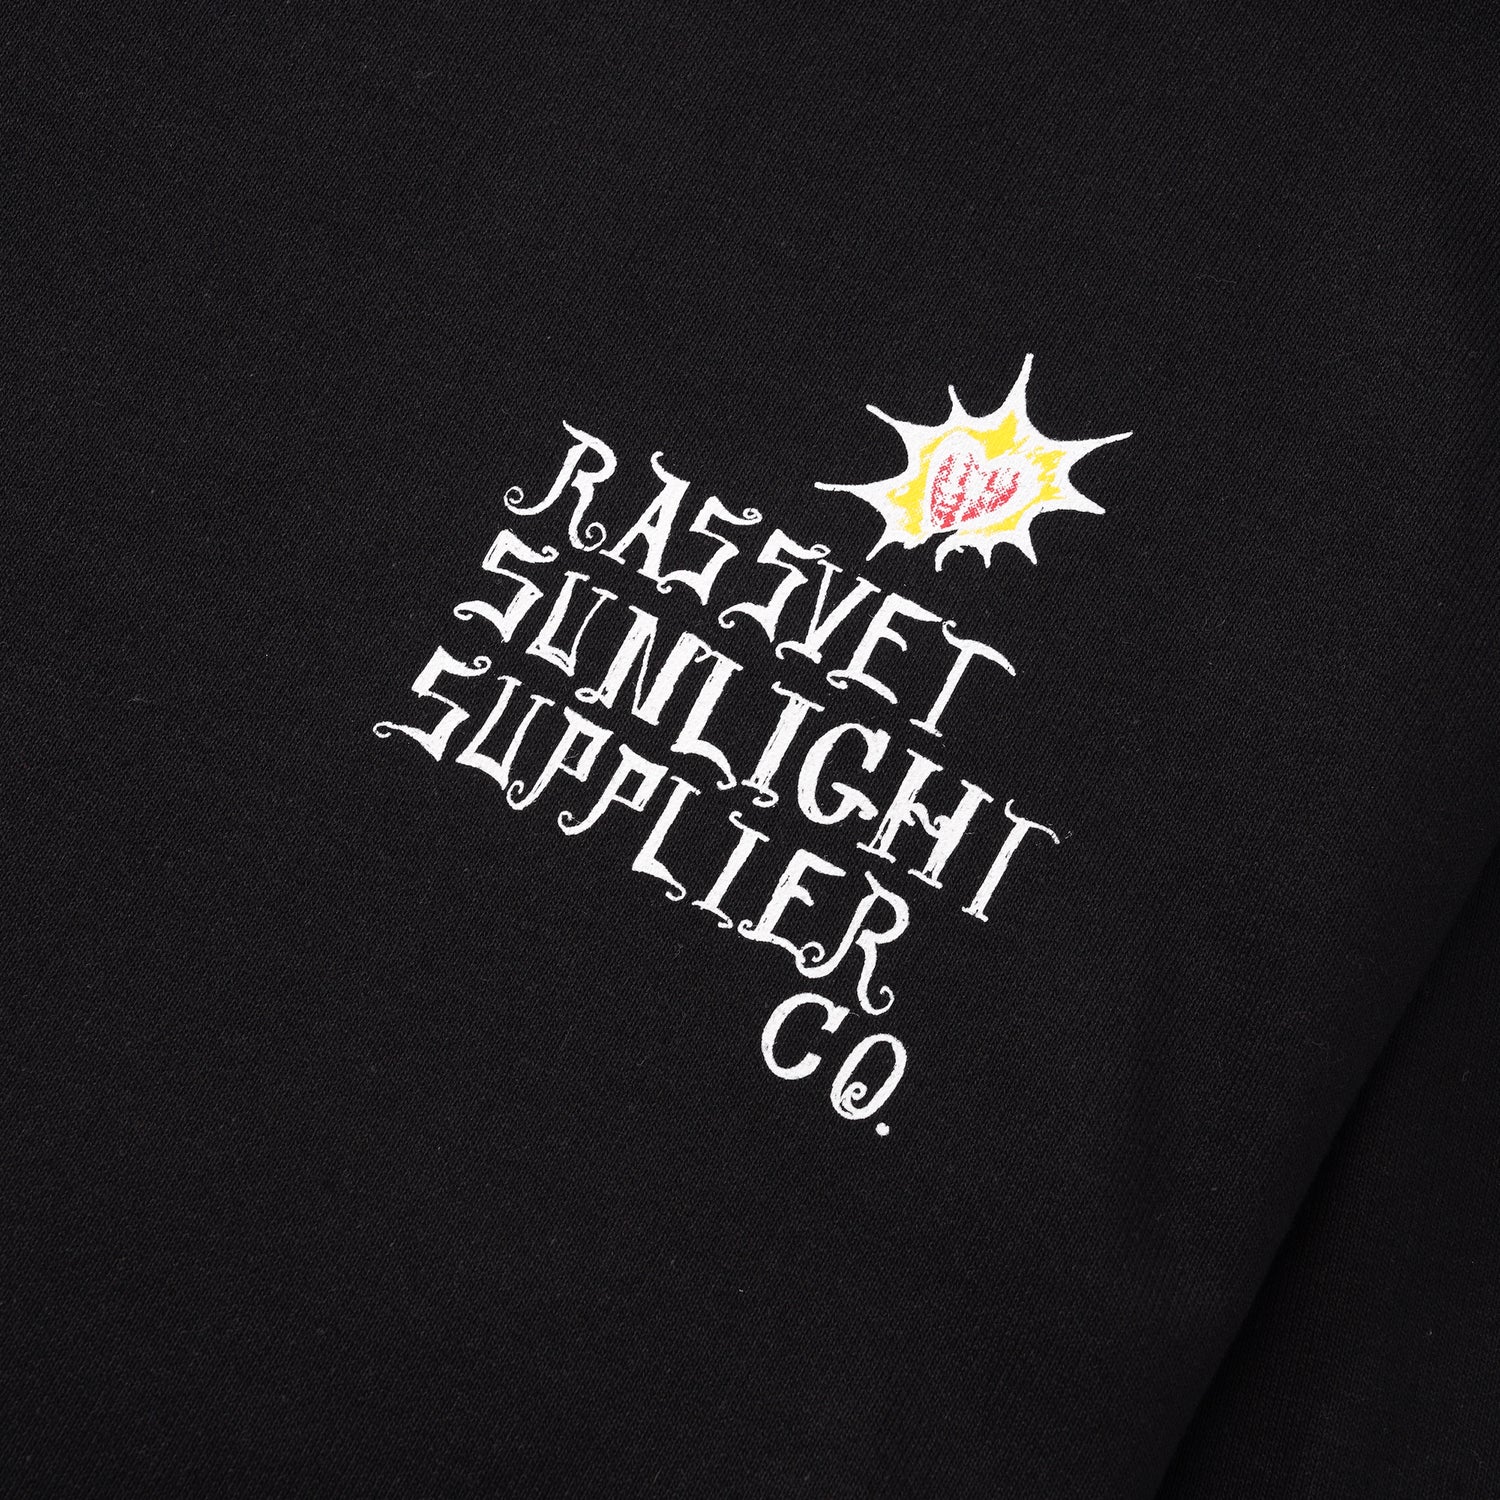 Sunlight Supplier Sweatshirt, Black